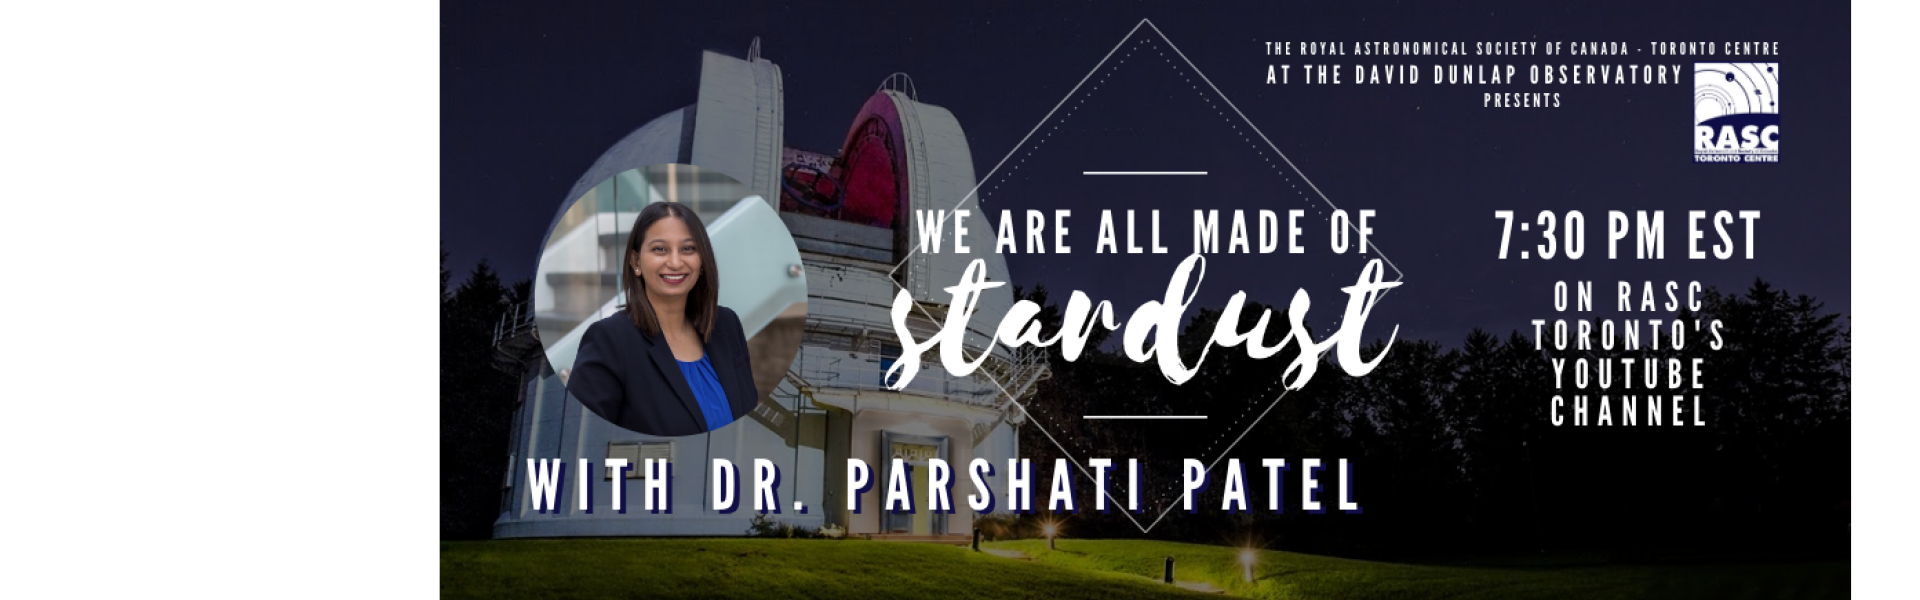 Dr. Parshati Patel